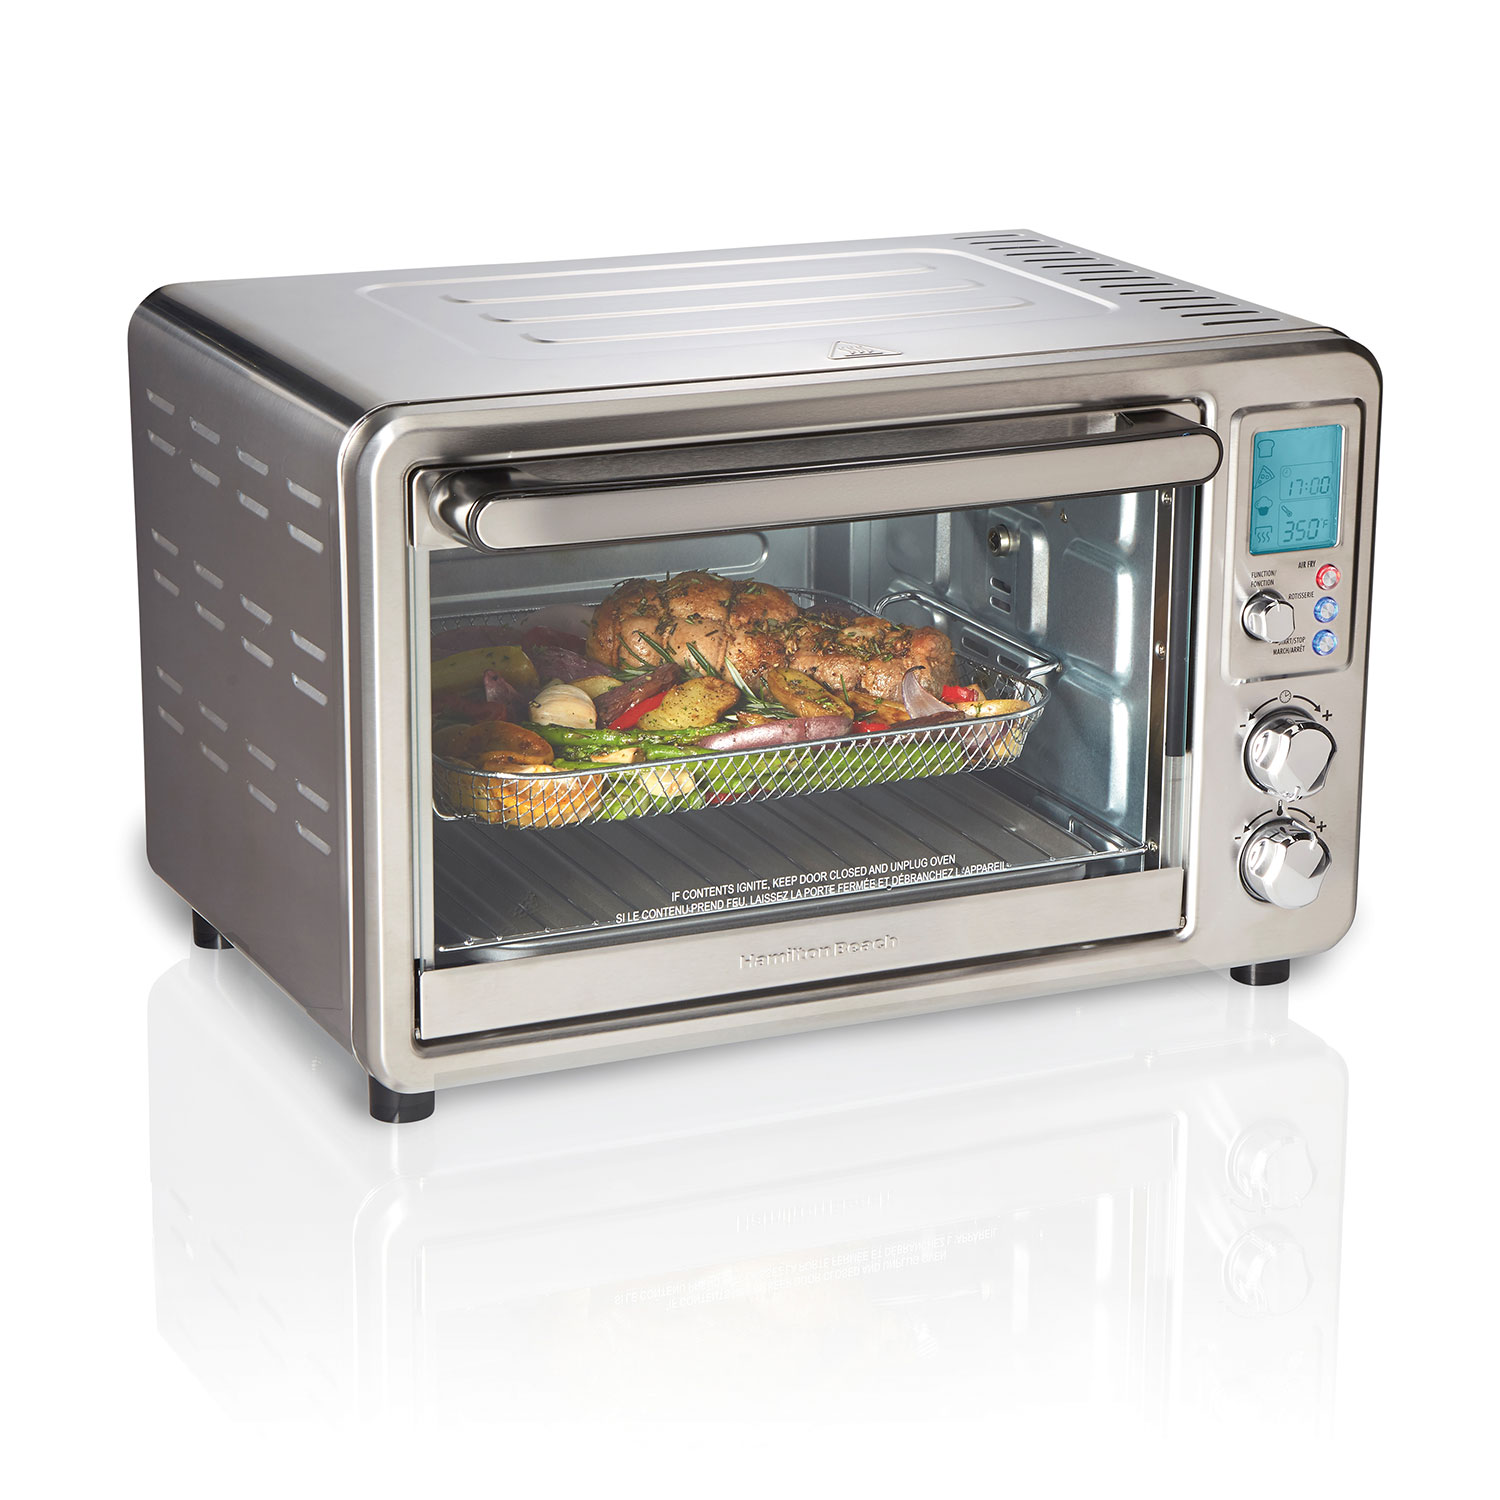 Sure-Crisp® Digital Air Fryer Toaster Oven with Rotisserie (31193C)